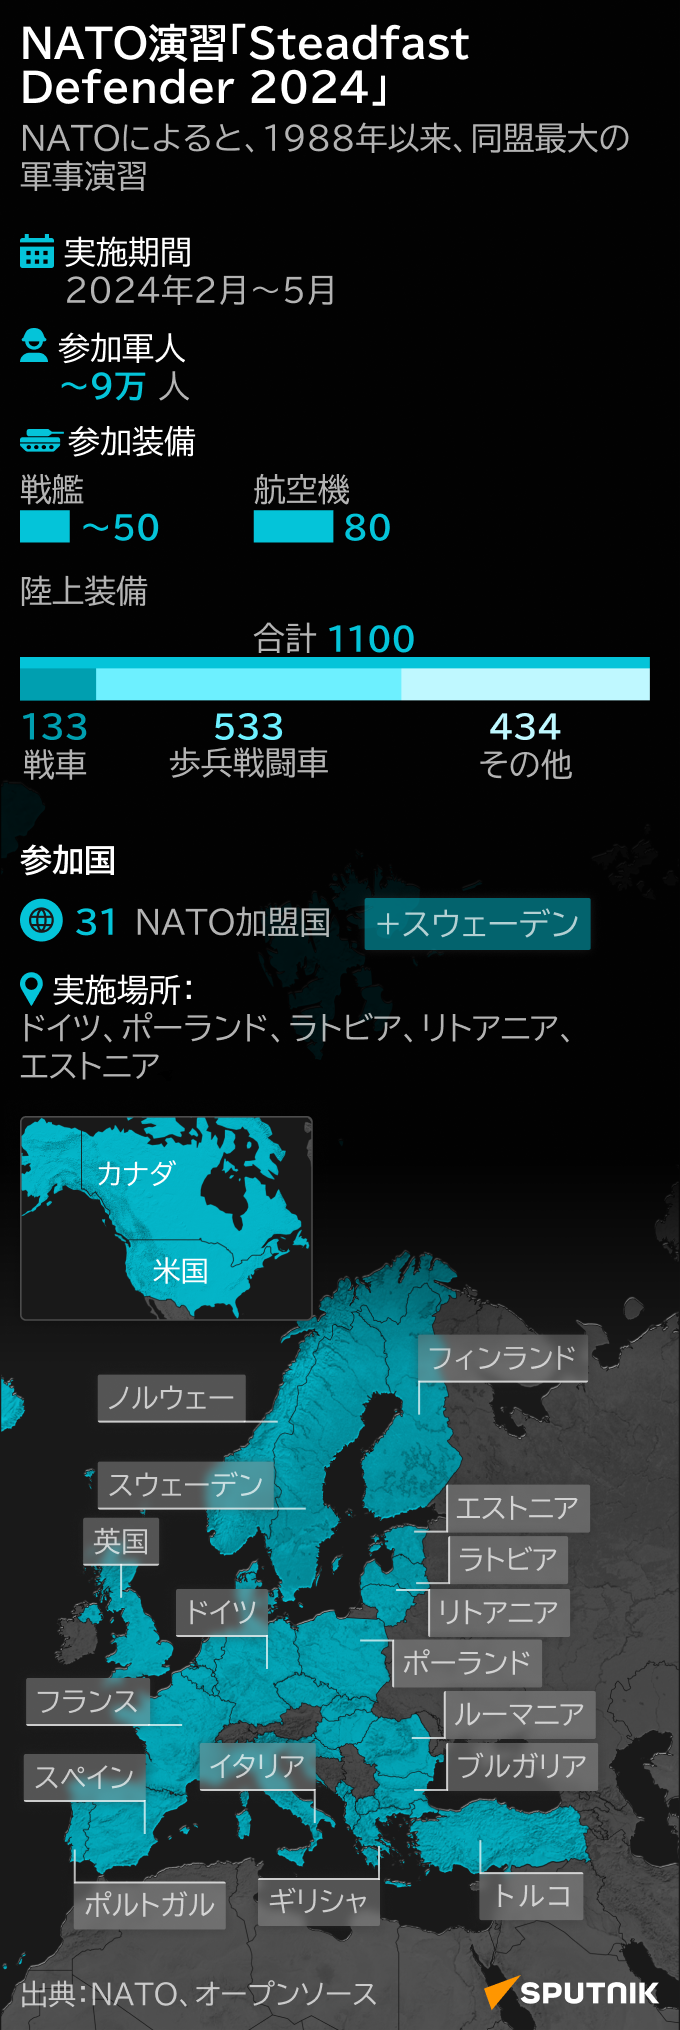 NATO演習「Steadfast Defender 2024」 - Sputnik 日本